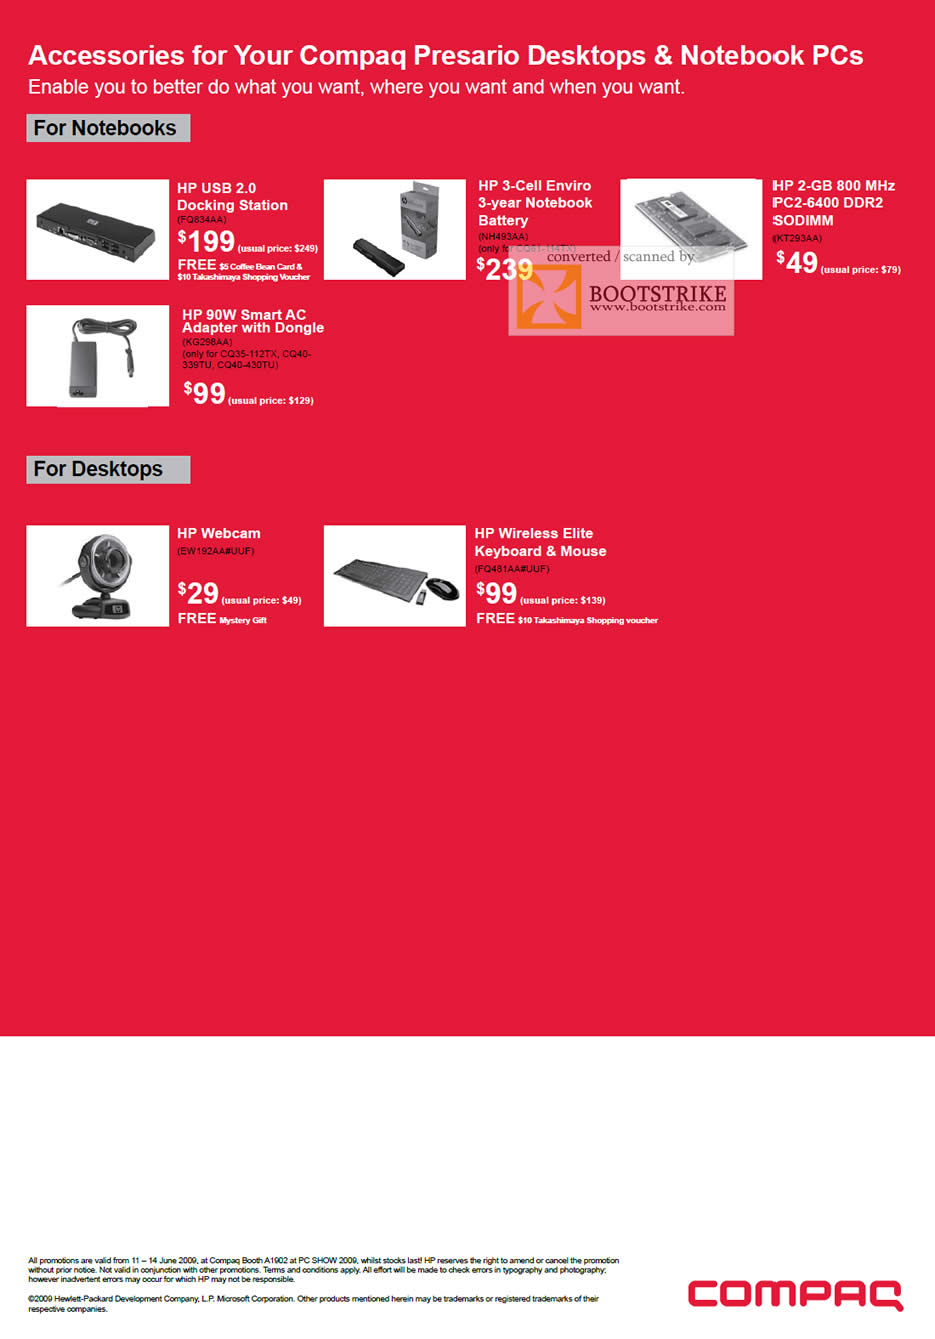 PC Show 2009 price list image brochure of Compaq Presario Desktop Notebook Accessories